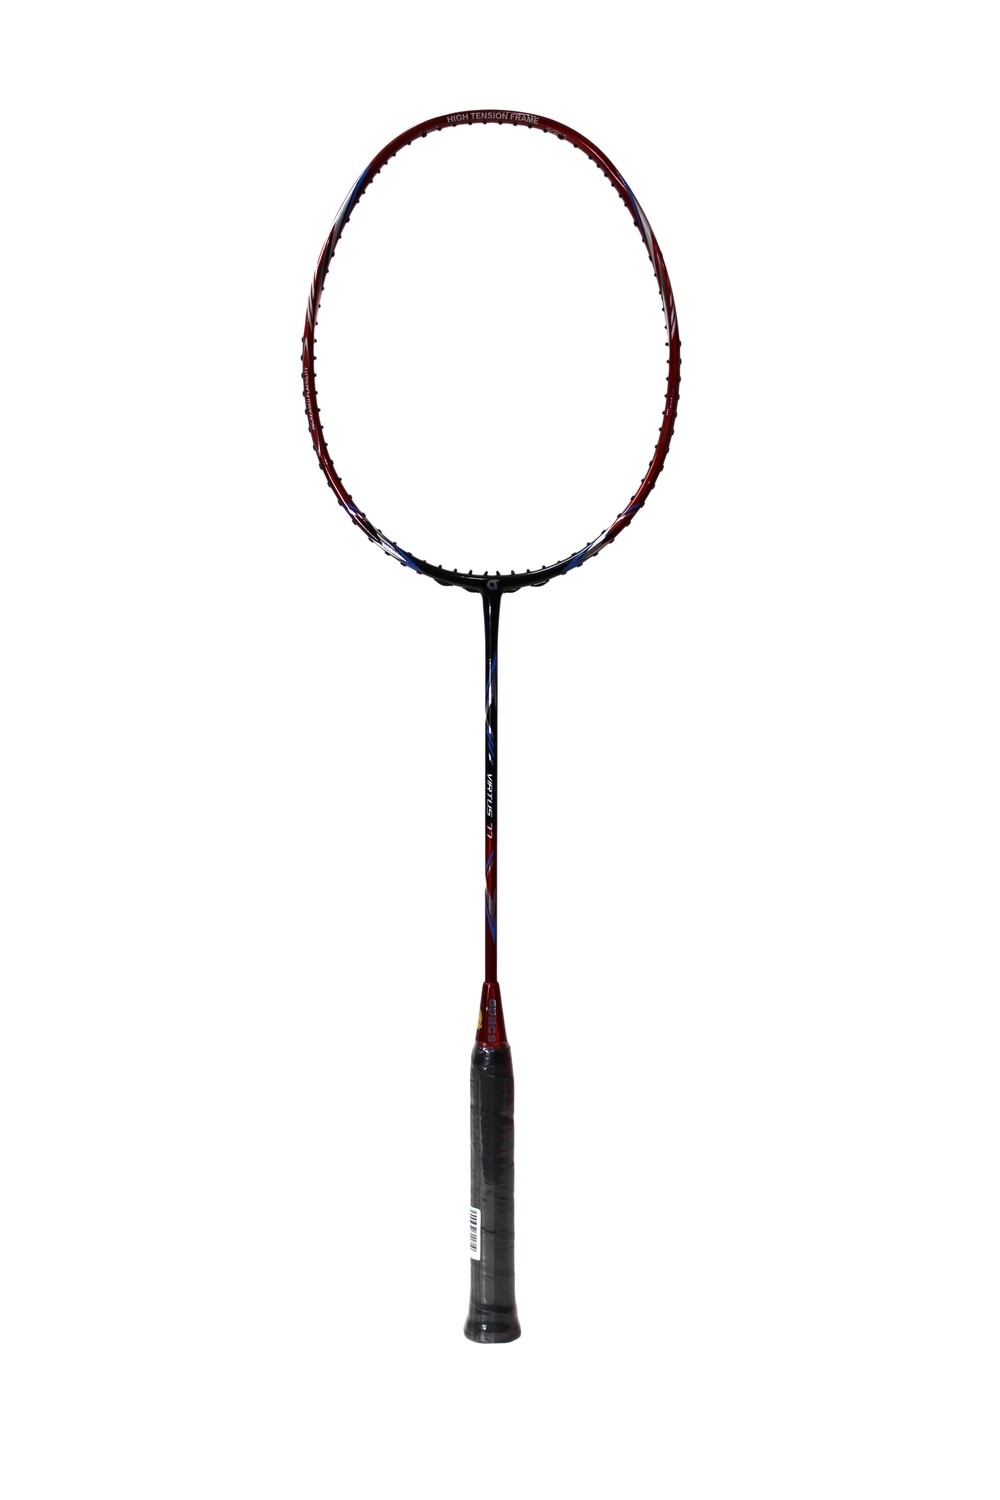 Apacs Virtus 77 Badminton Racquet